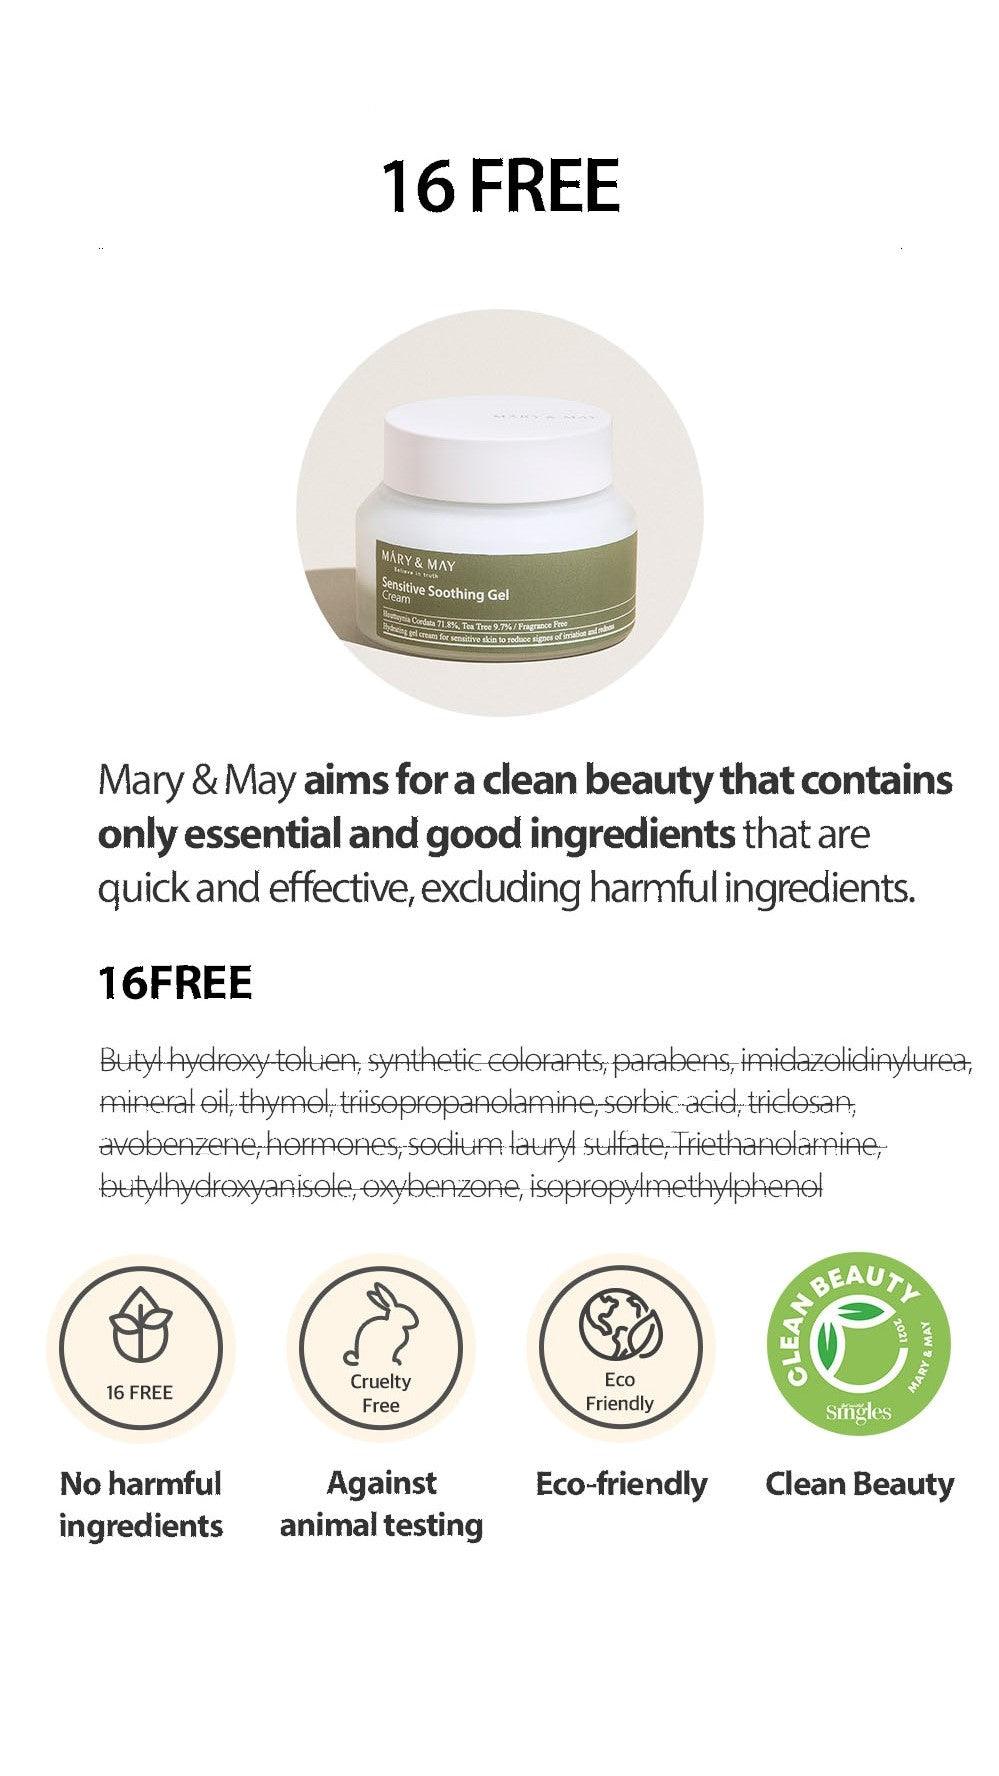 [MARY&MAY] Sensitive Soothing Gel Blemish Cream - 70ml - KBeauti